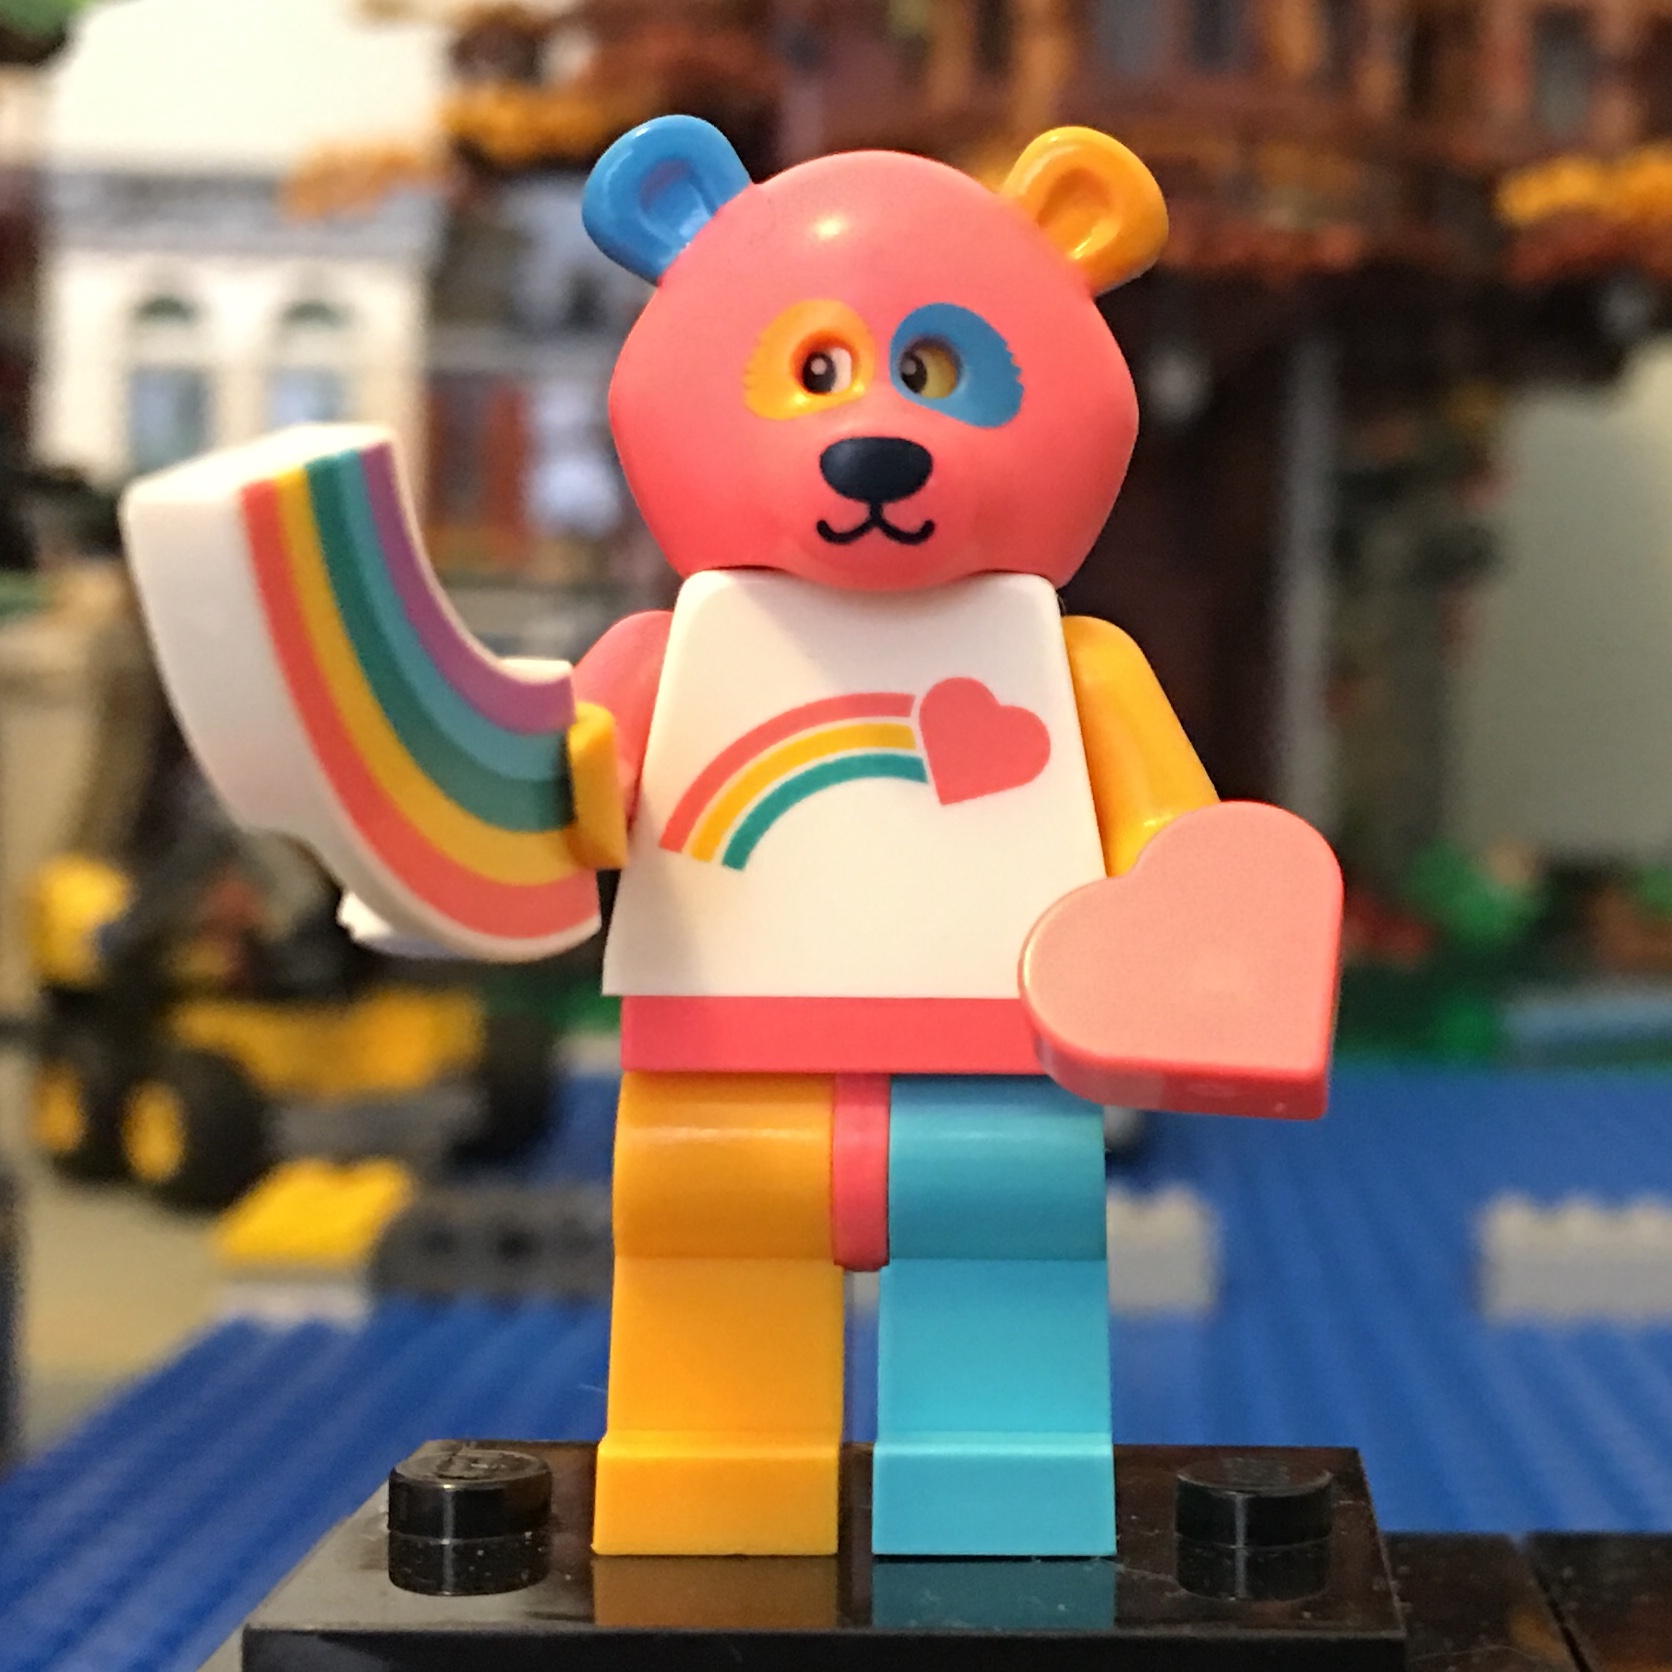 LEGO 71025 Series 19 Minifigures BEAR COSTUME GUY HEART RAINBOW SEALED NEW 